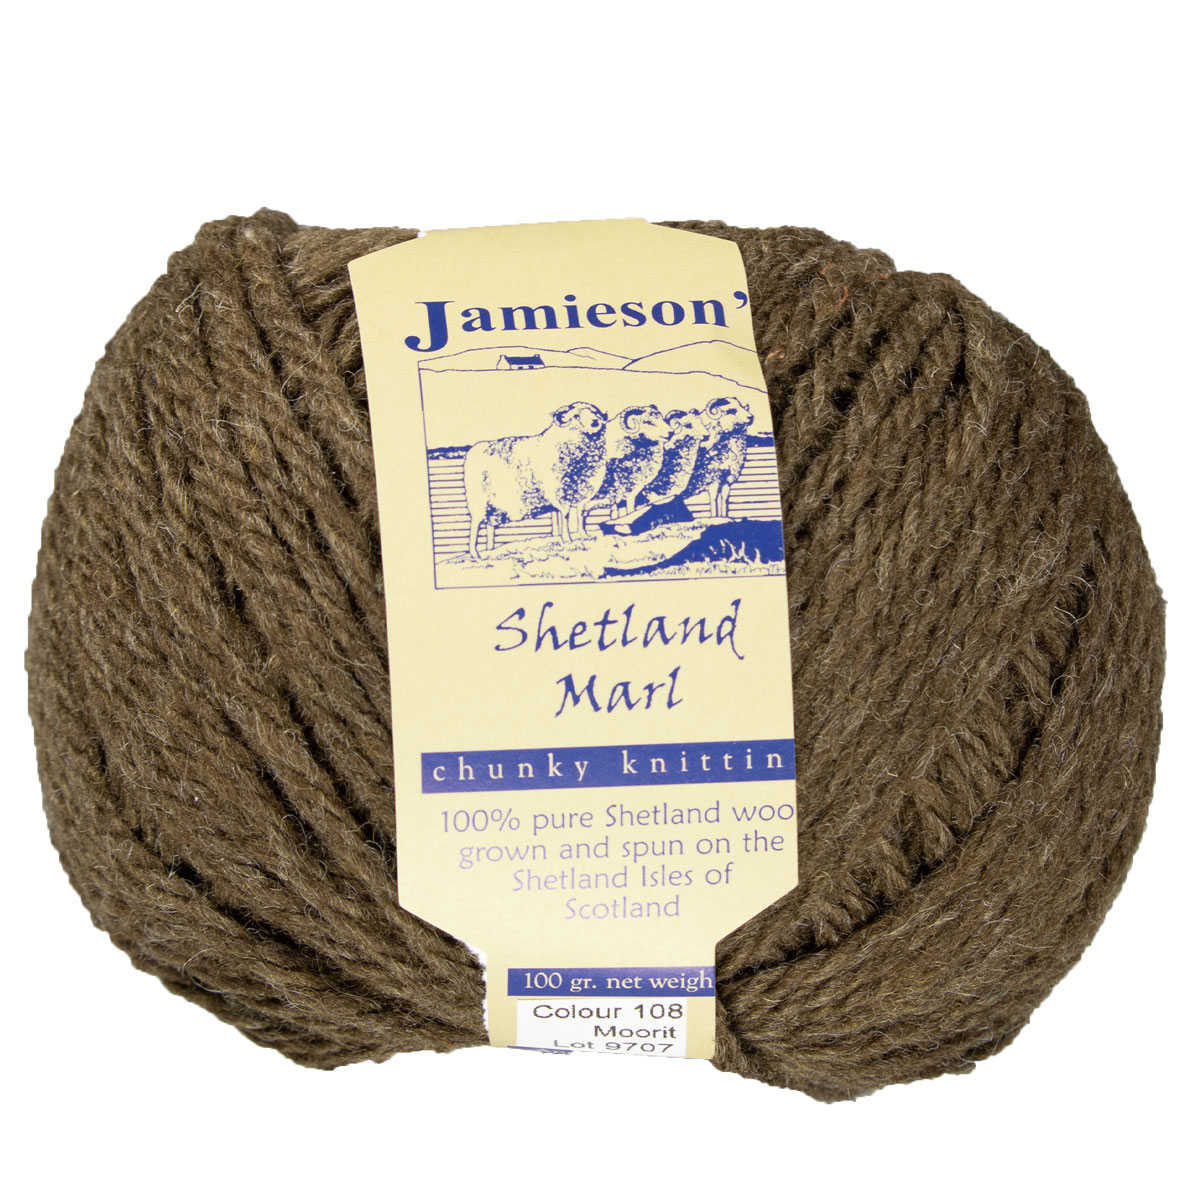 Jamieson's of Shetland Marl Chunky